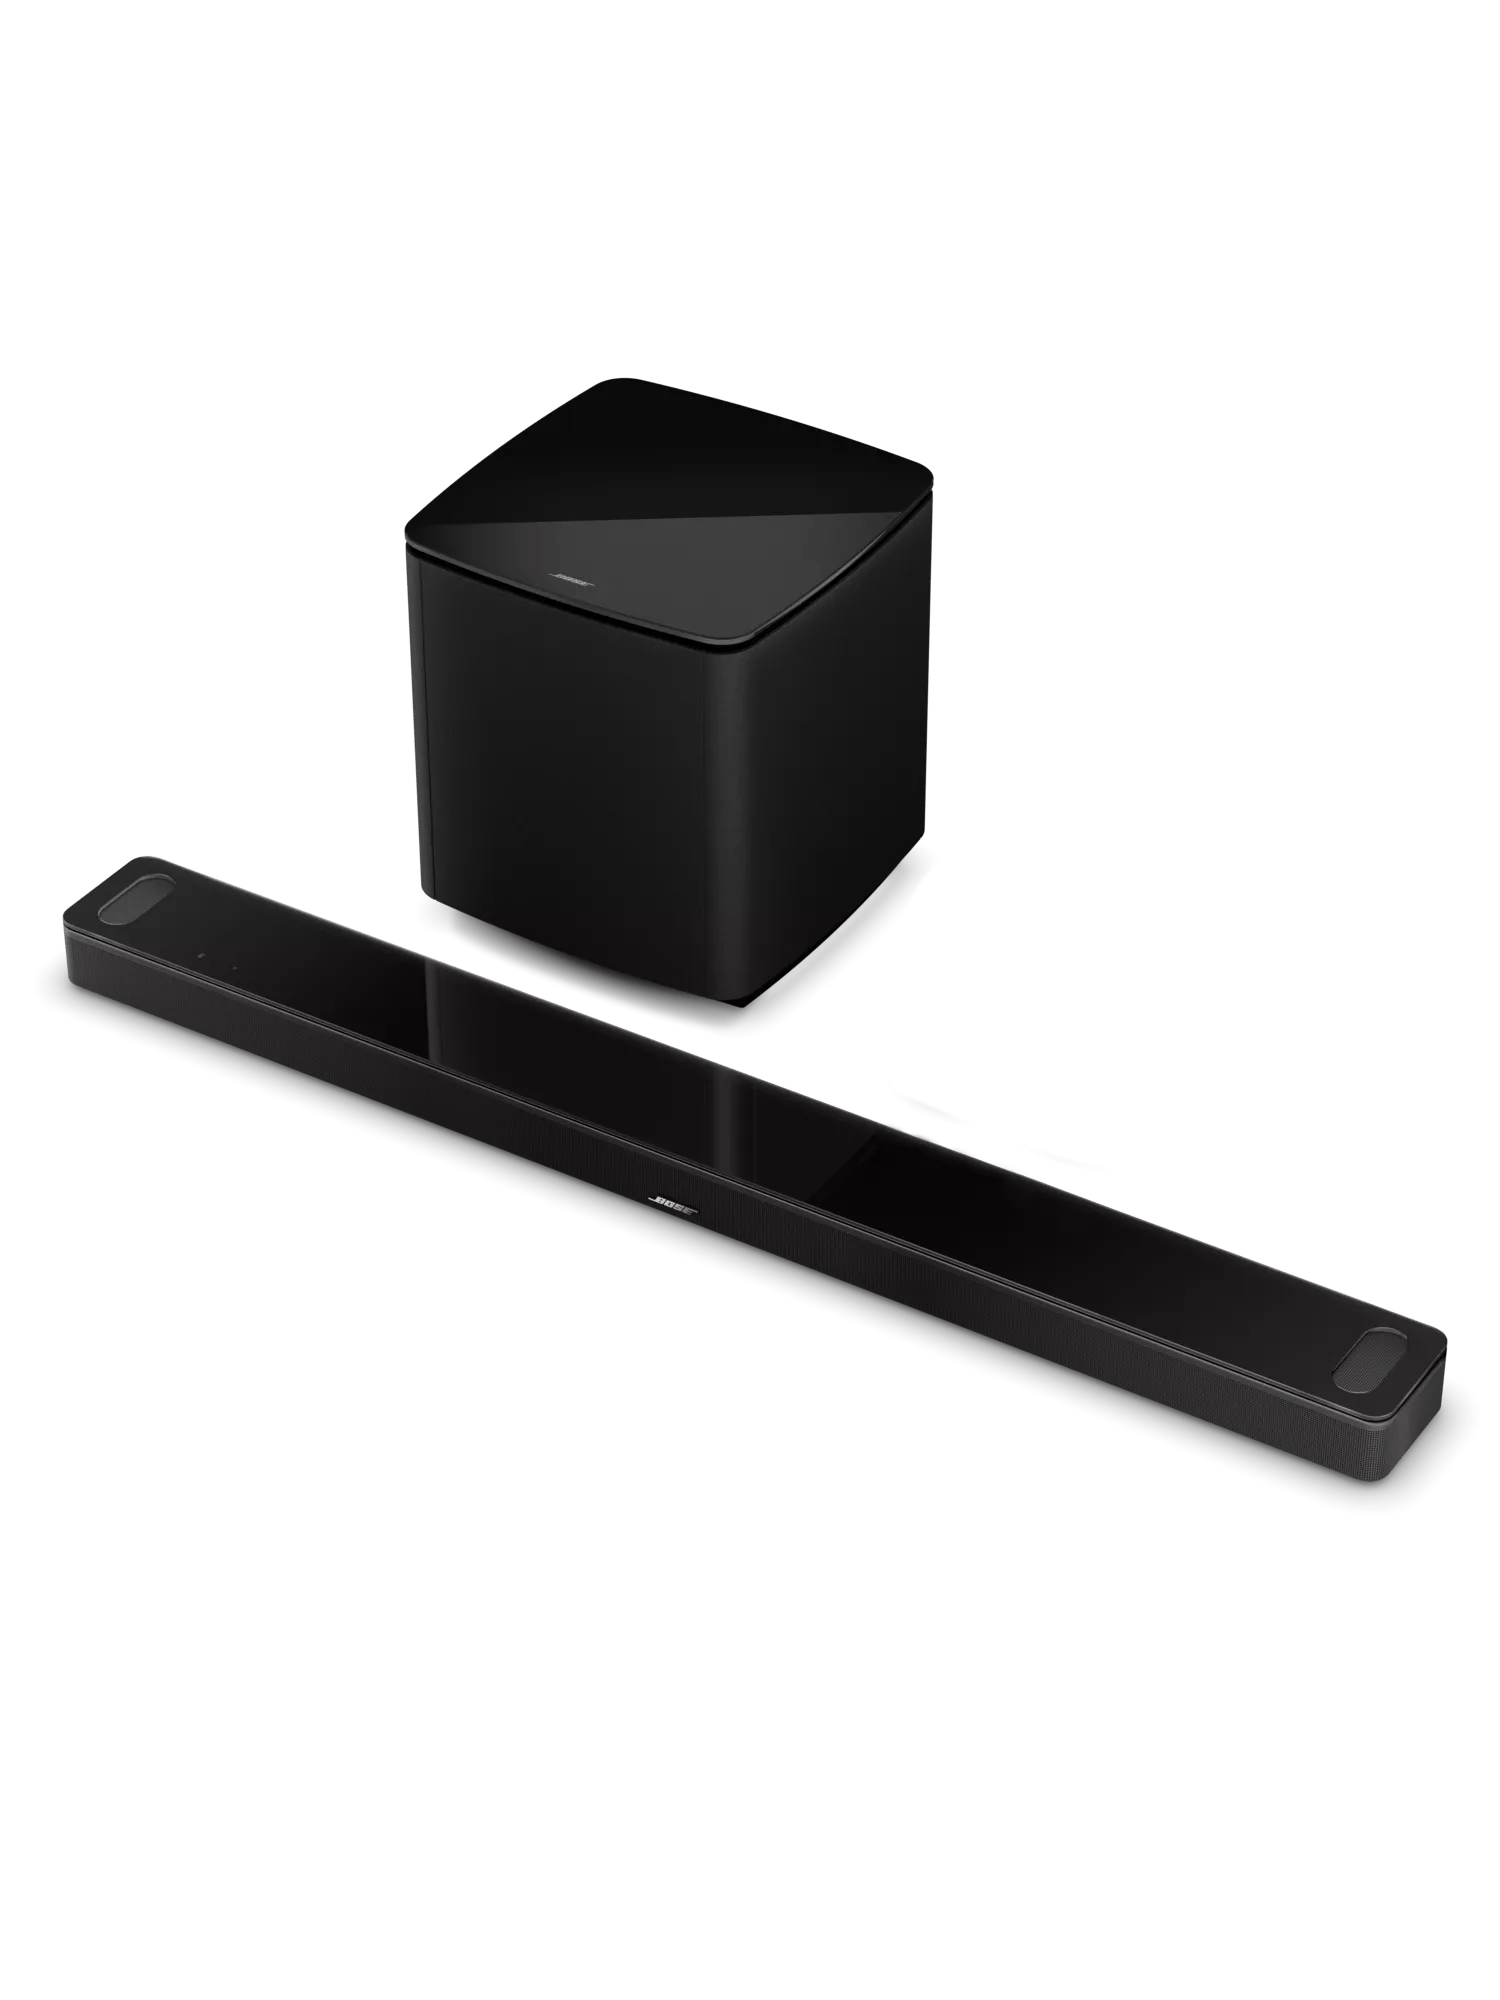 Bose Smart Soundbar 900 / Bose Bass Module 700 (Black) Dolby Atmos® sound  bar and matching Bass Module at Crutchfield